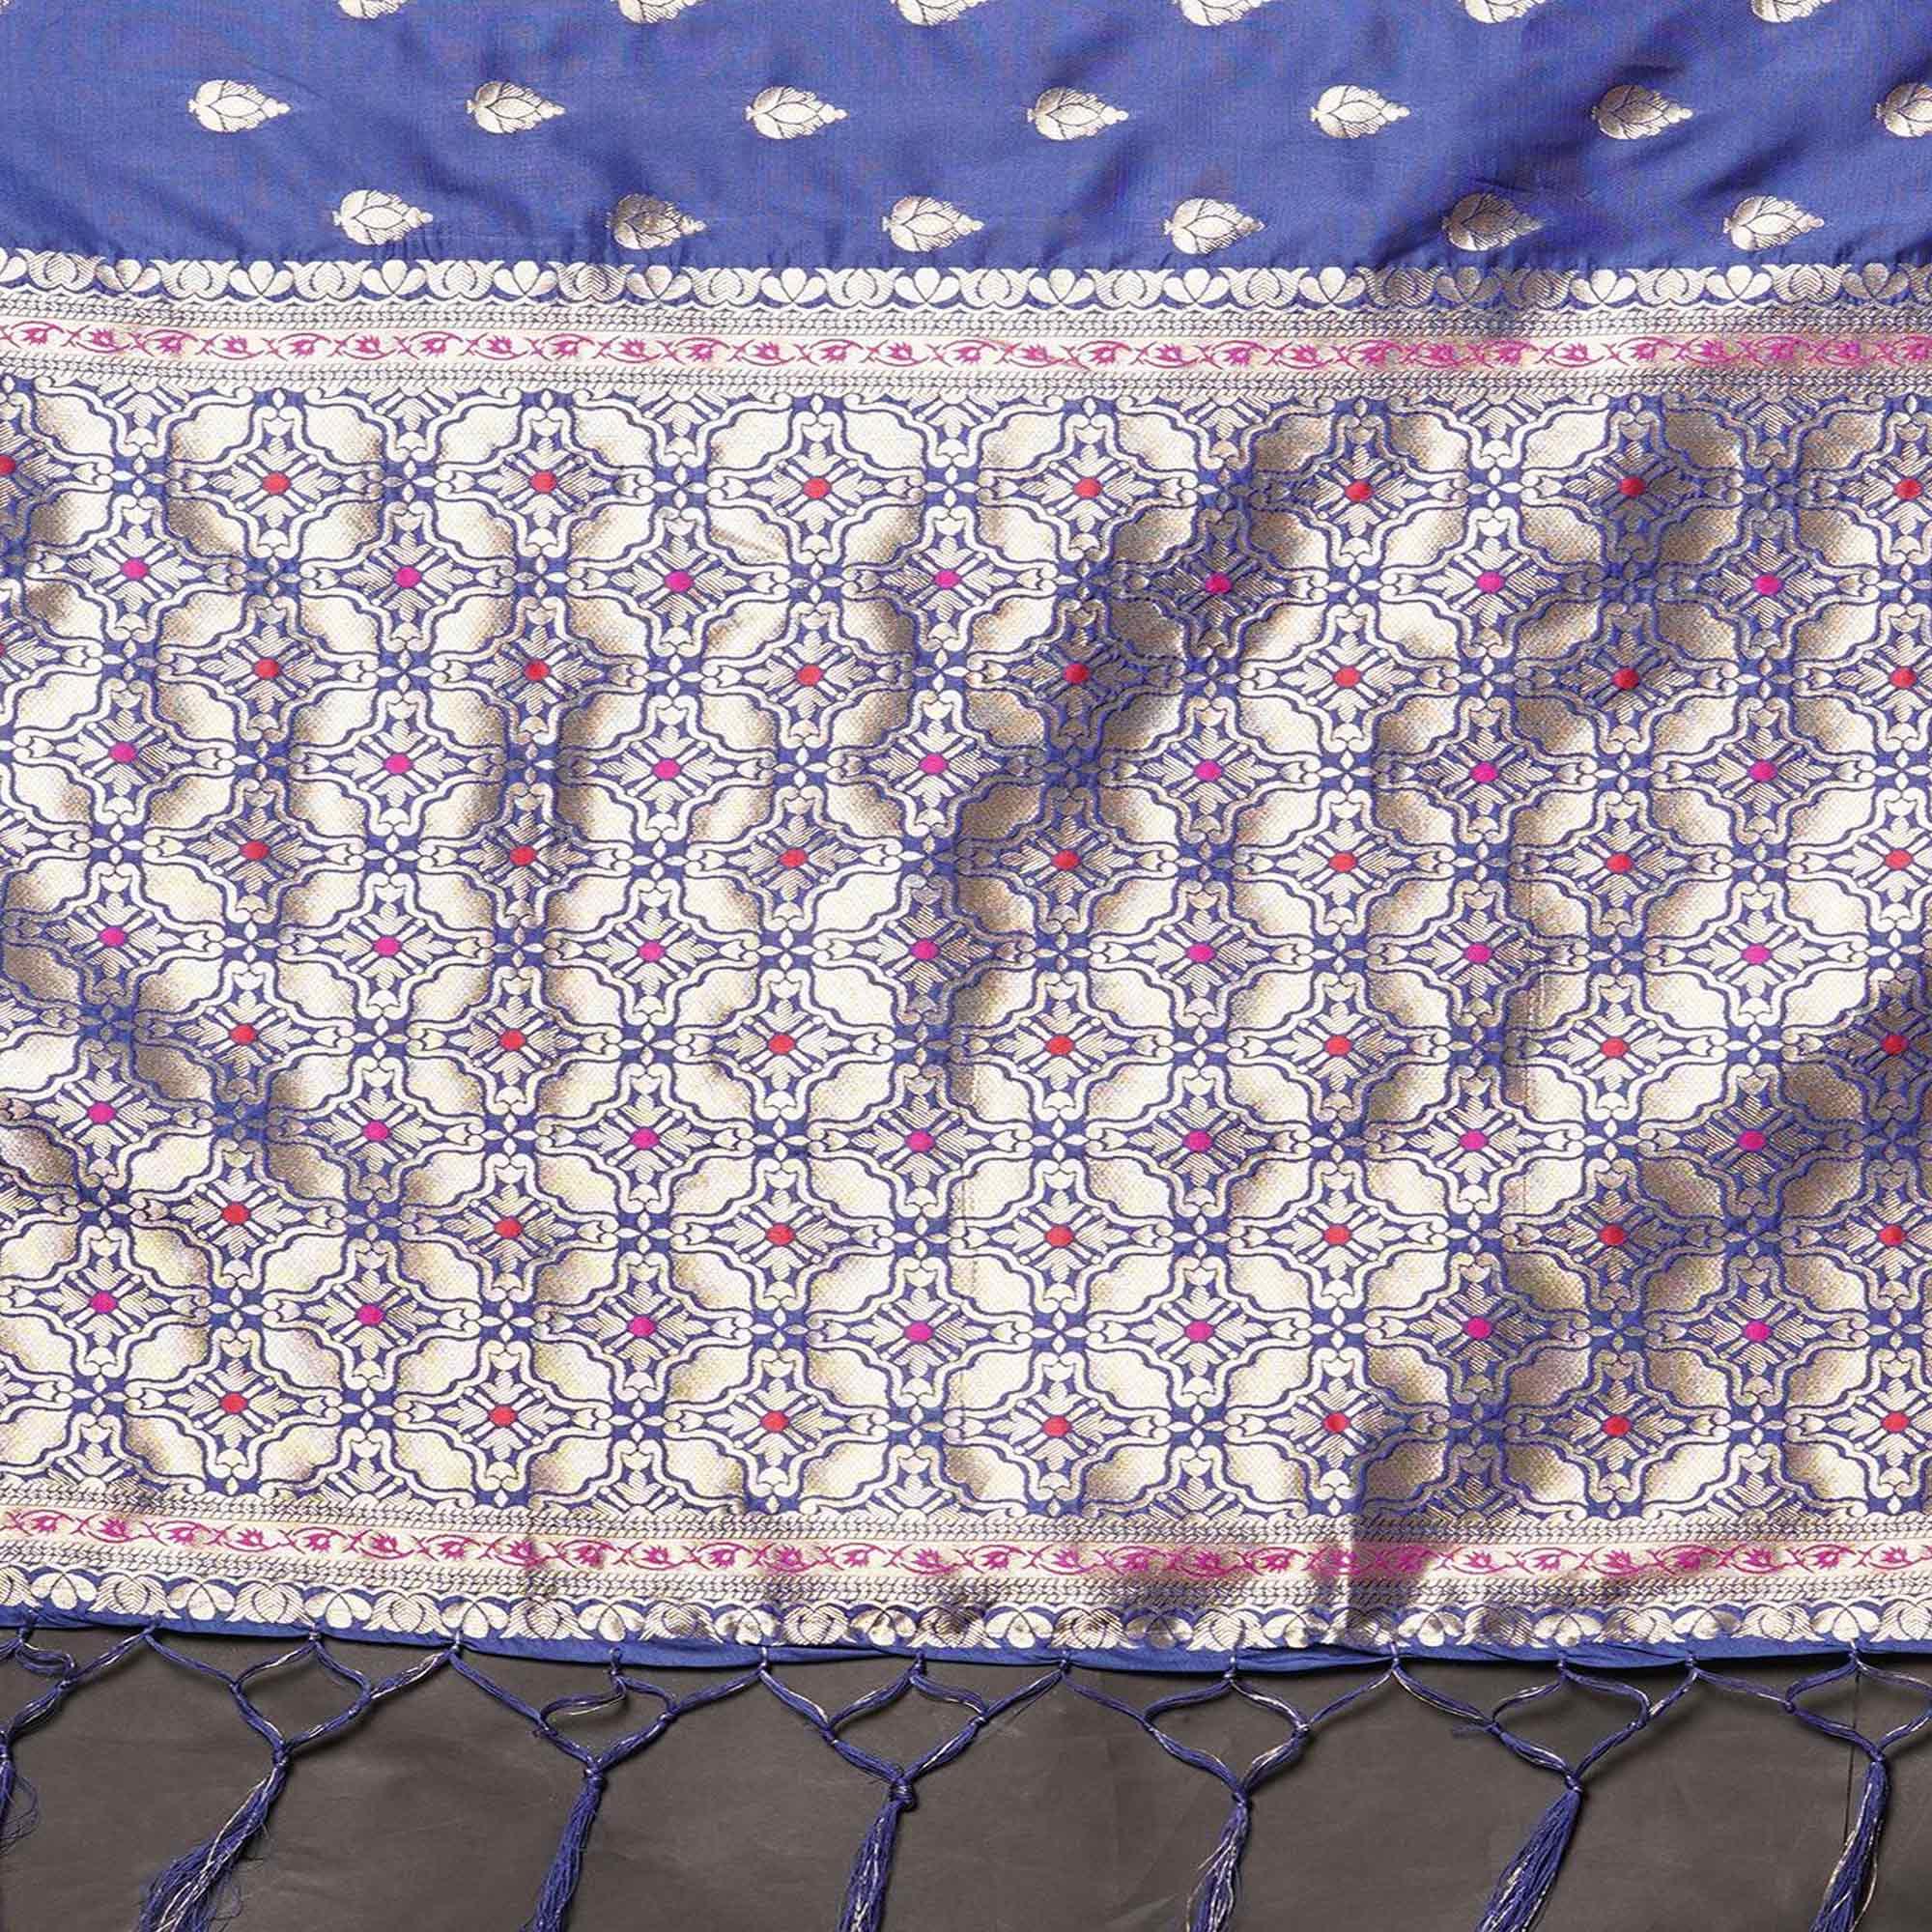 Sareemall Blue Festive Wear Silk Blend Woven Border Saree With Unstitched Blouse - Peachmode